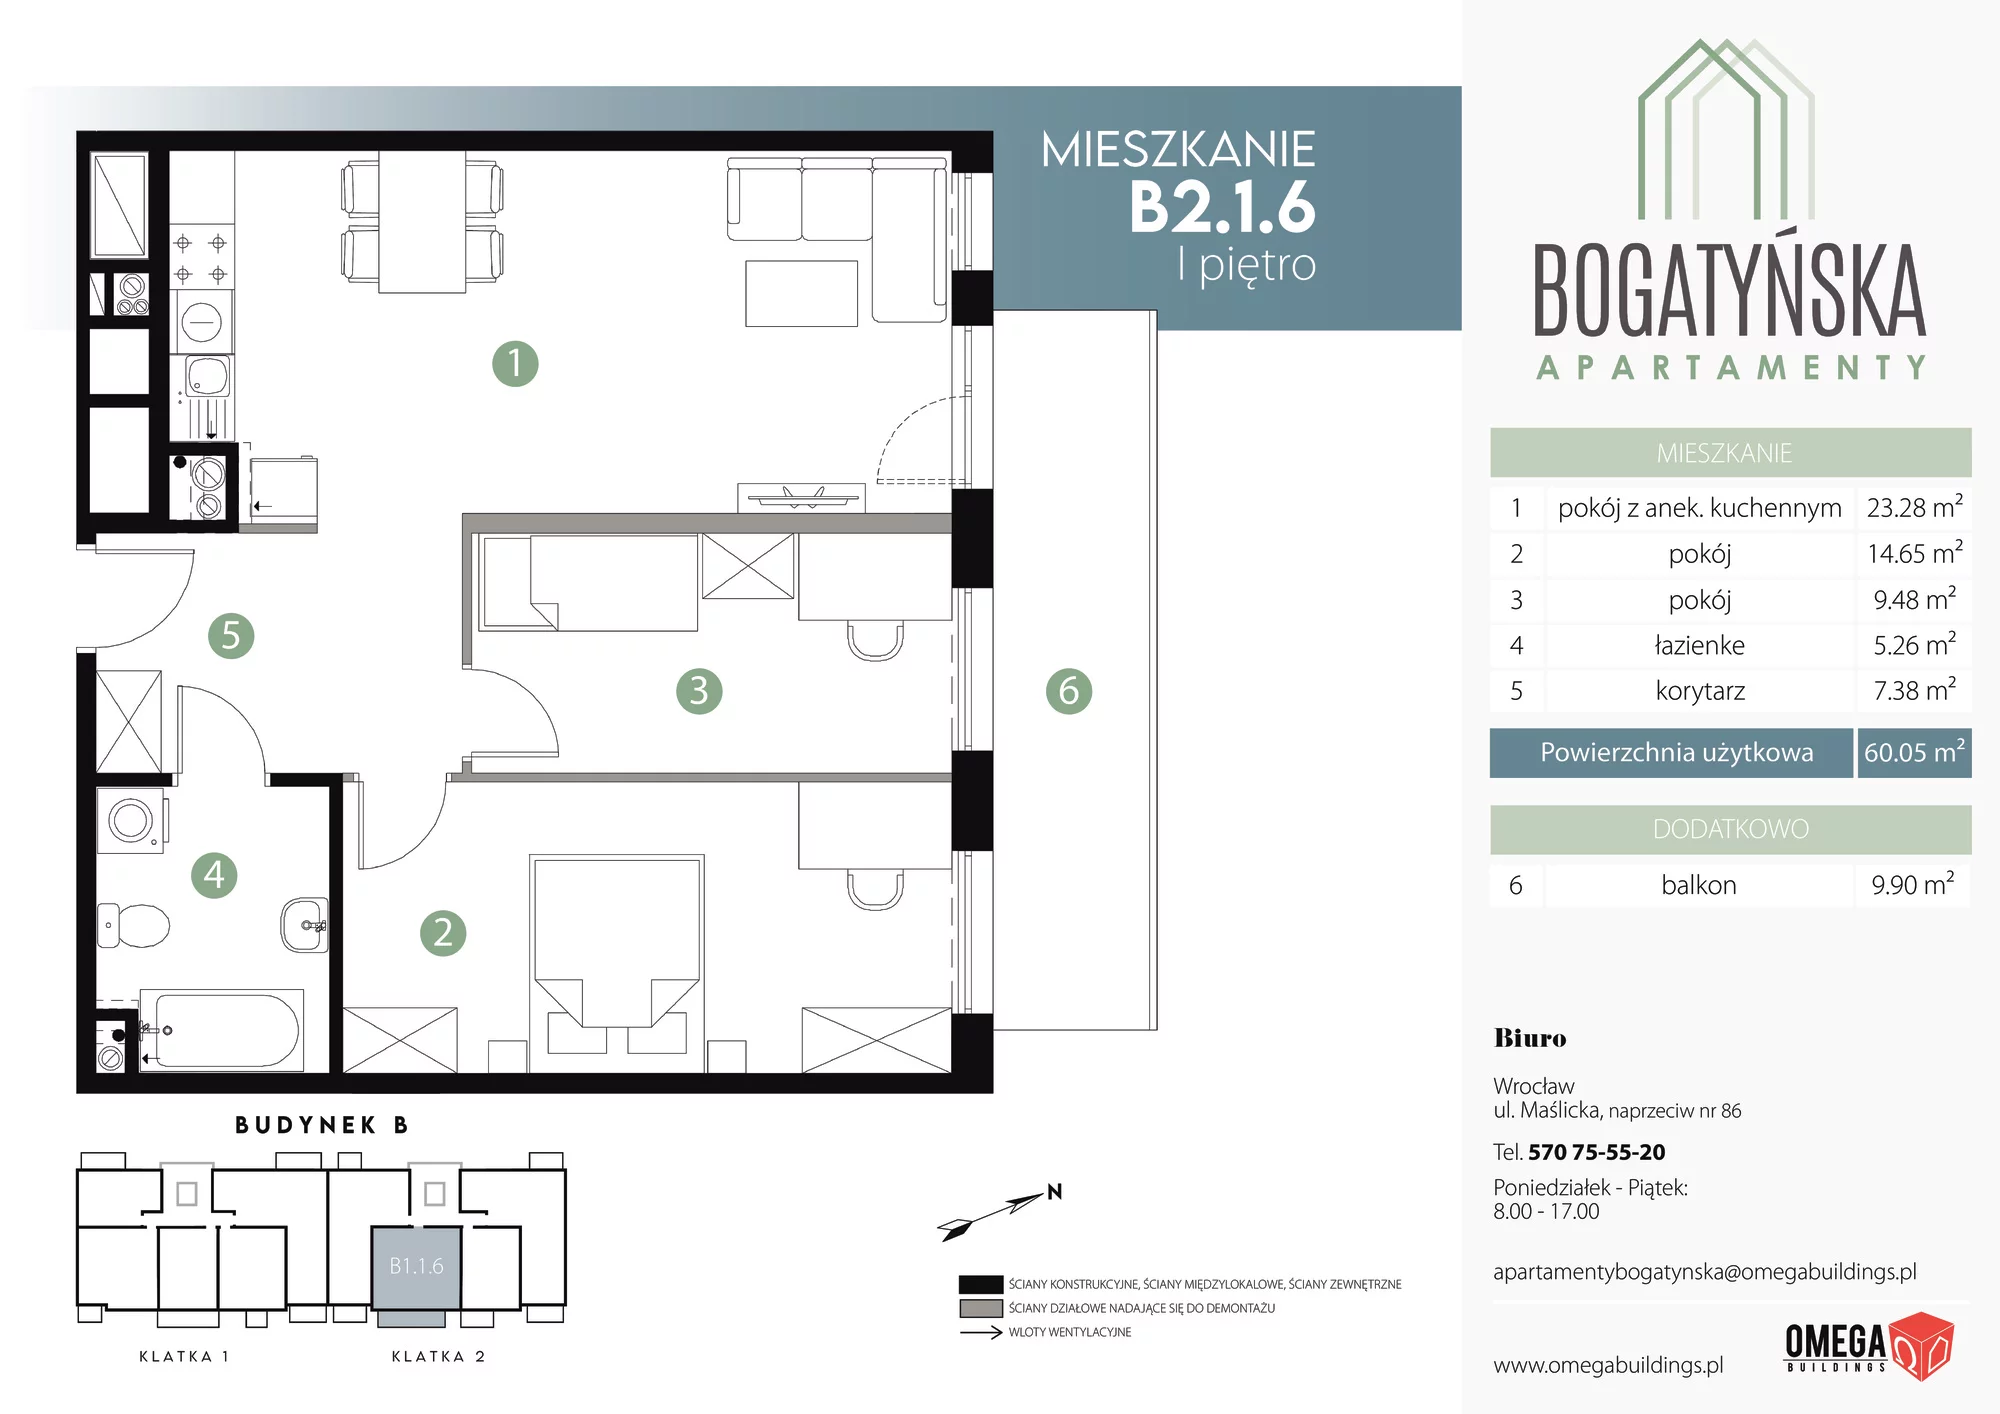 Apartament 60,05 m², piętro 1, oferta nr B2.1.6, Bogatyńska Apartamenty, Wrocław, Maślice, Fabryczna, ul. Bogatyńska